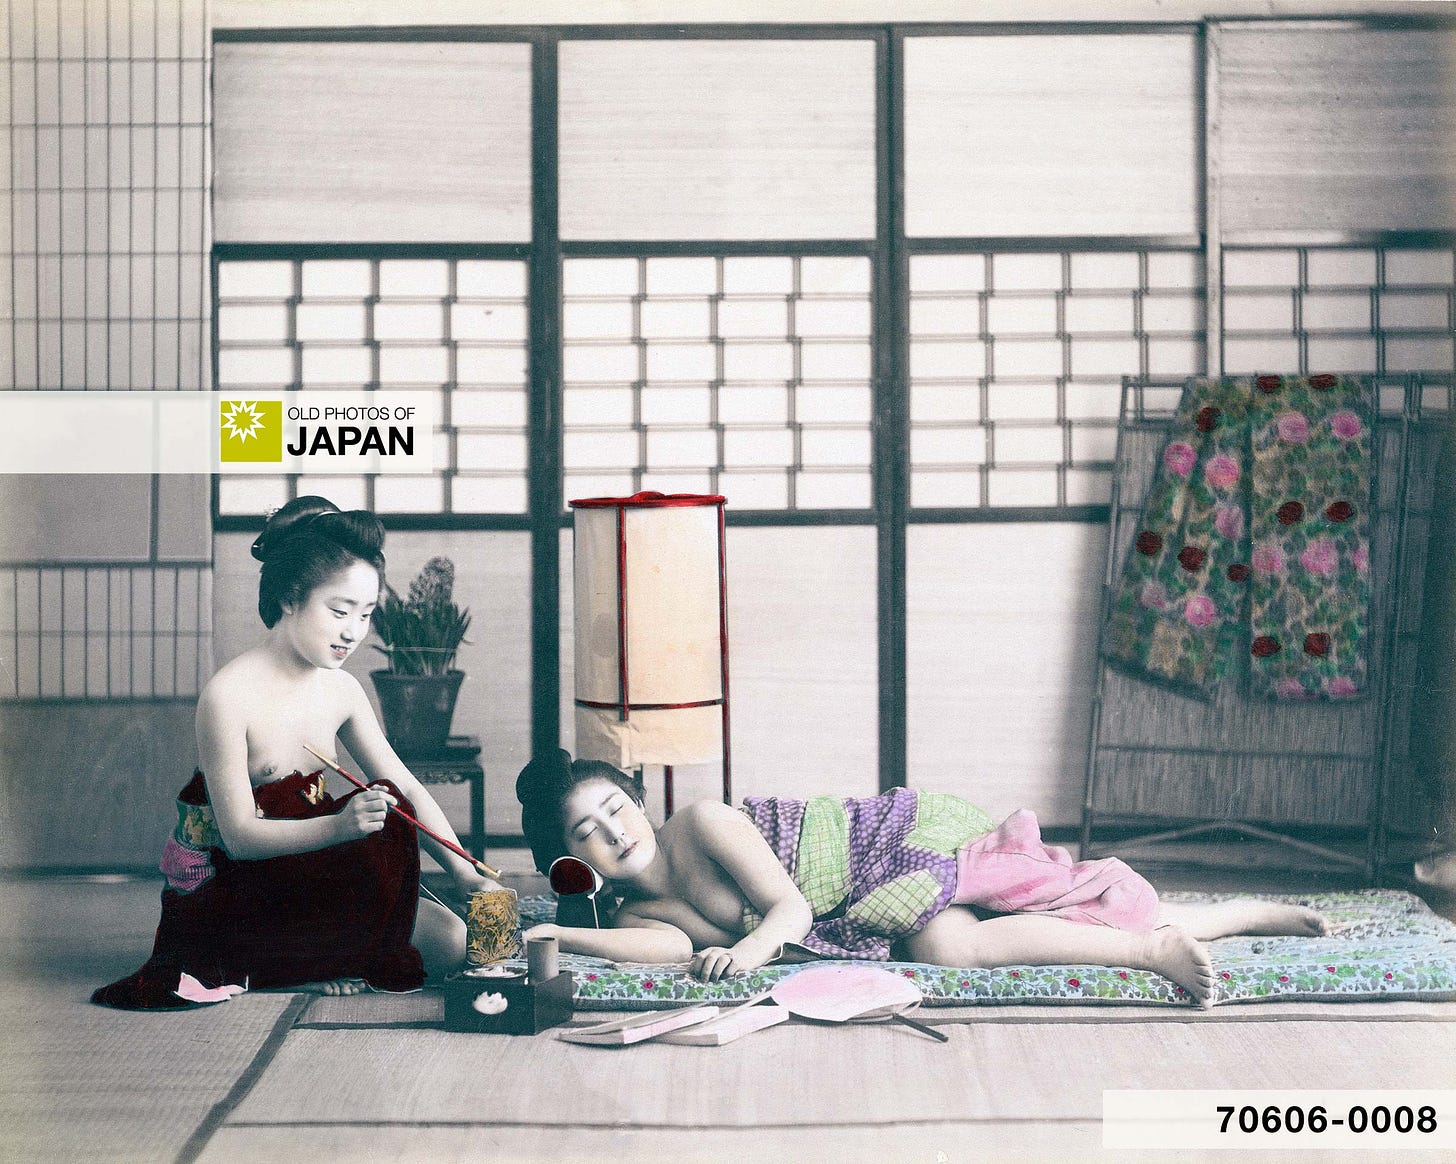 70606-0008 - Two half-nude Japanese women, 1890s